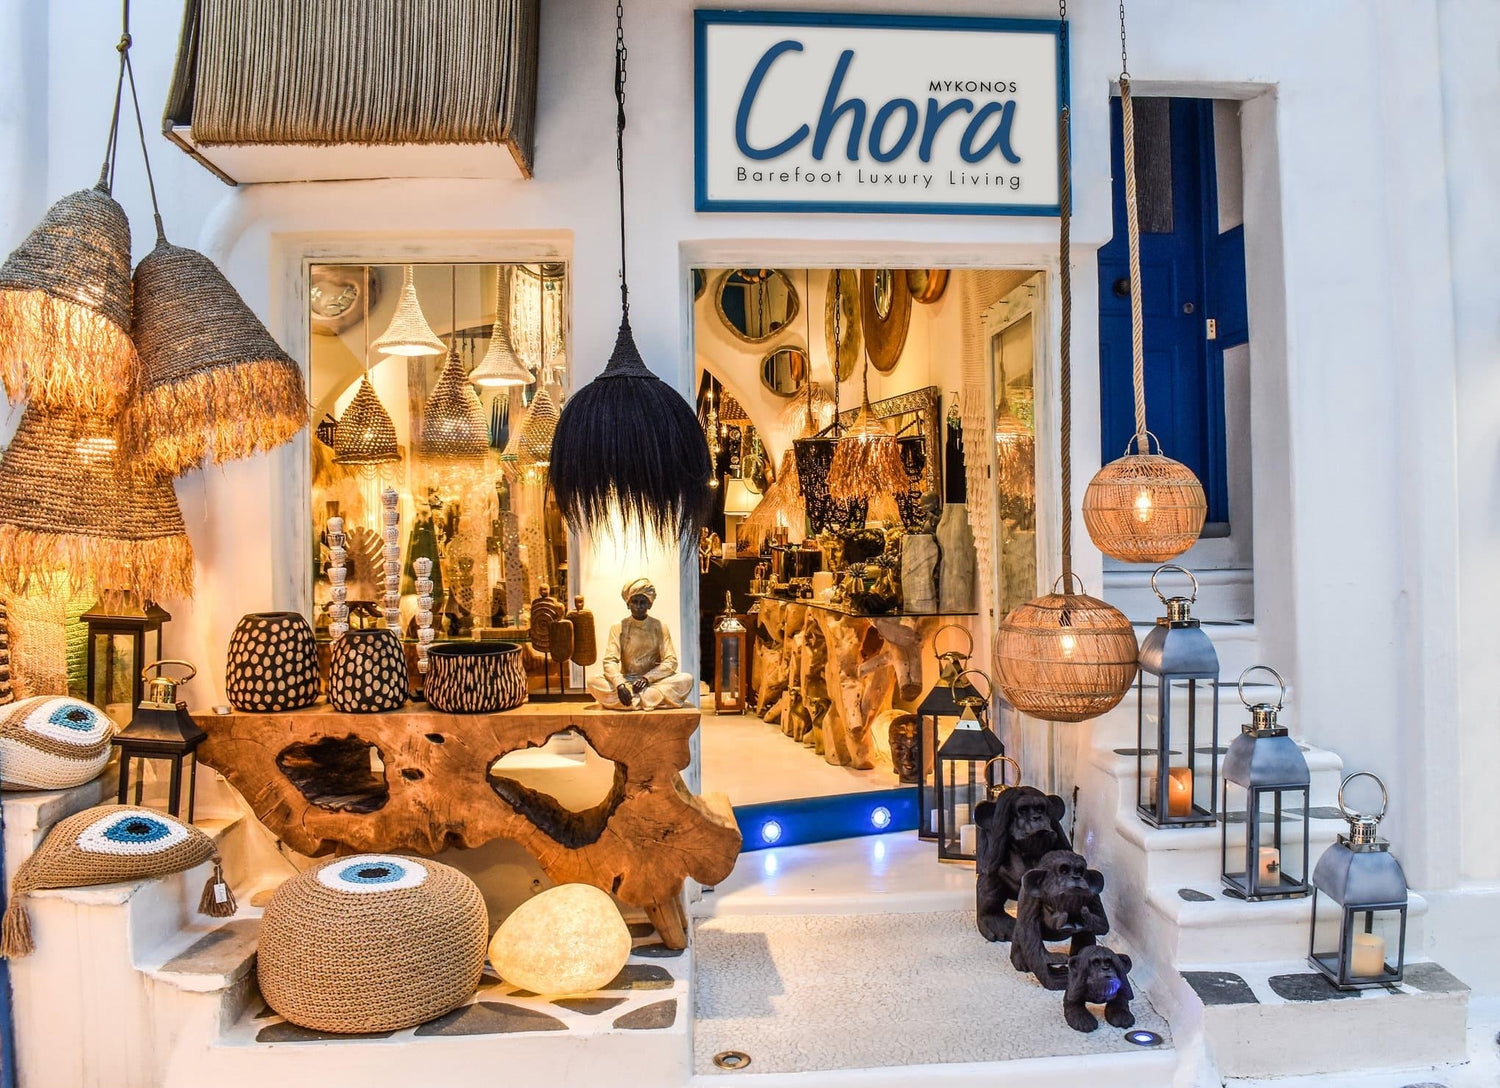 chora_branch_1 - Chora Barefoot Luxury Living